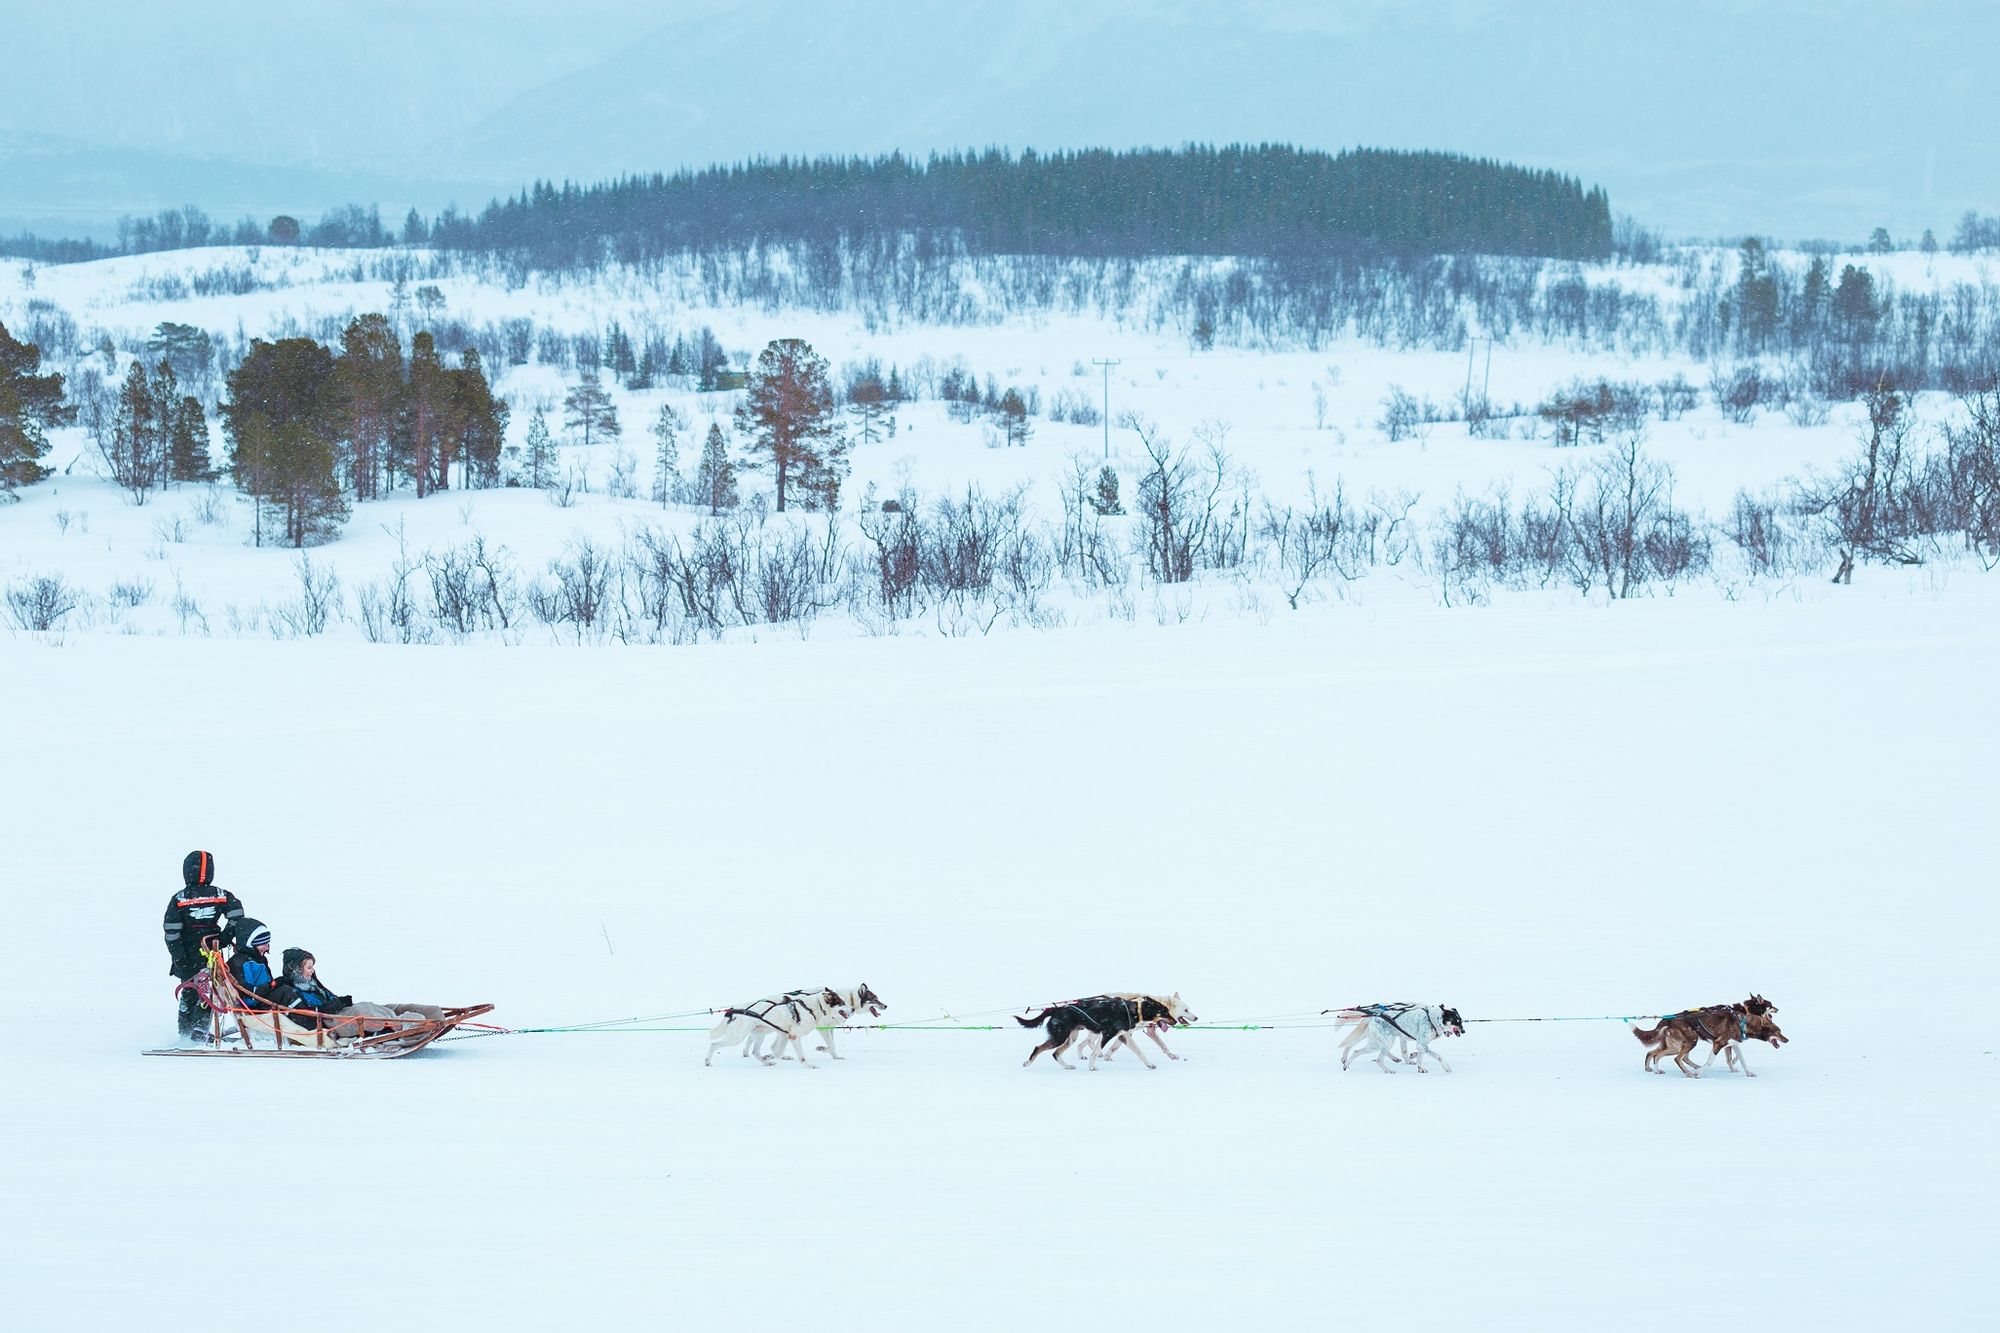 Huskies pull a dog sled across a snowy landscape